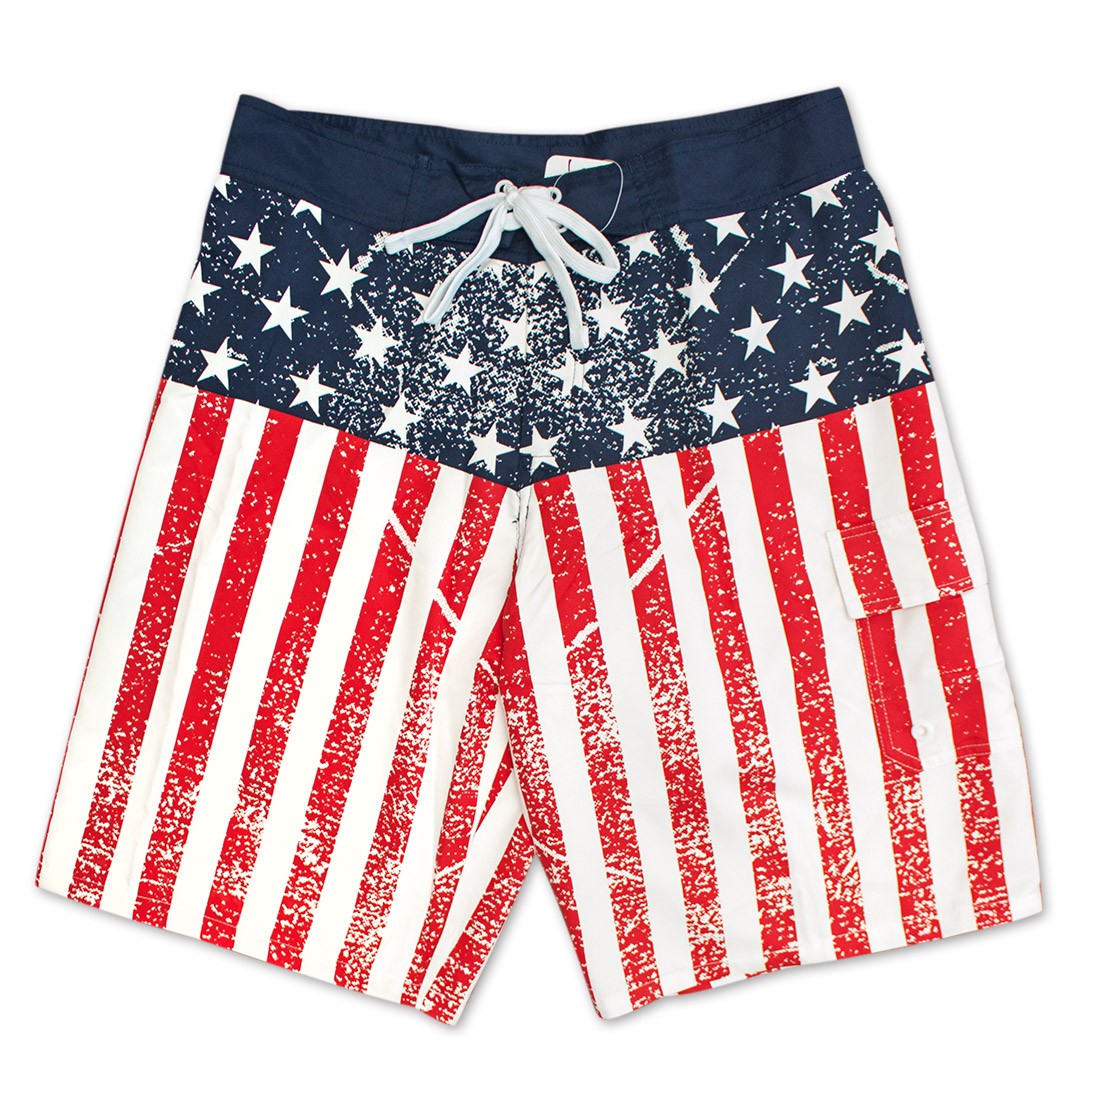 USA Distressed Patriotic American Flag Boardshorts